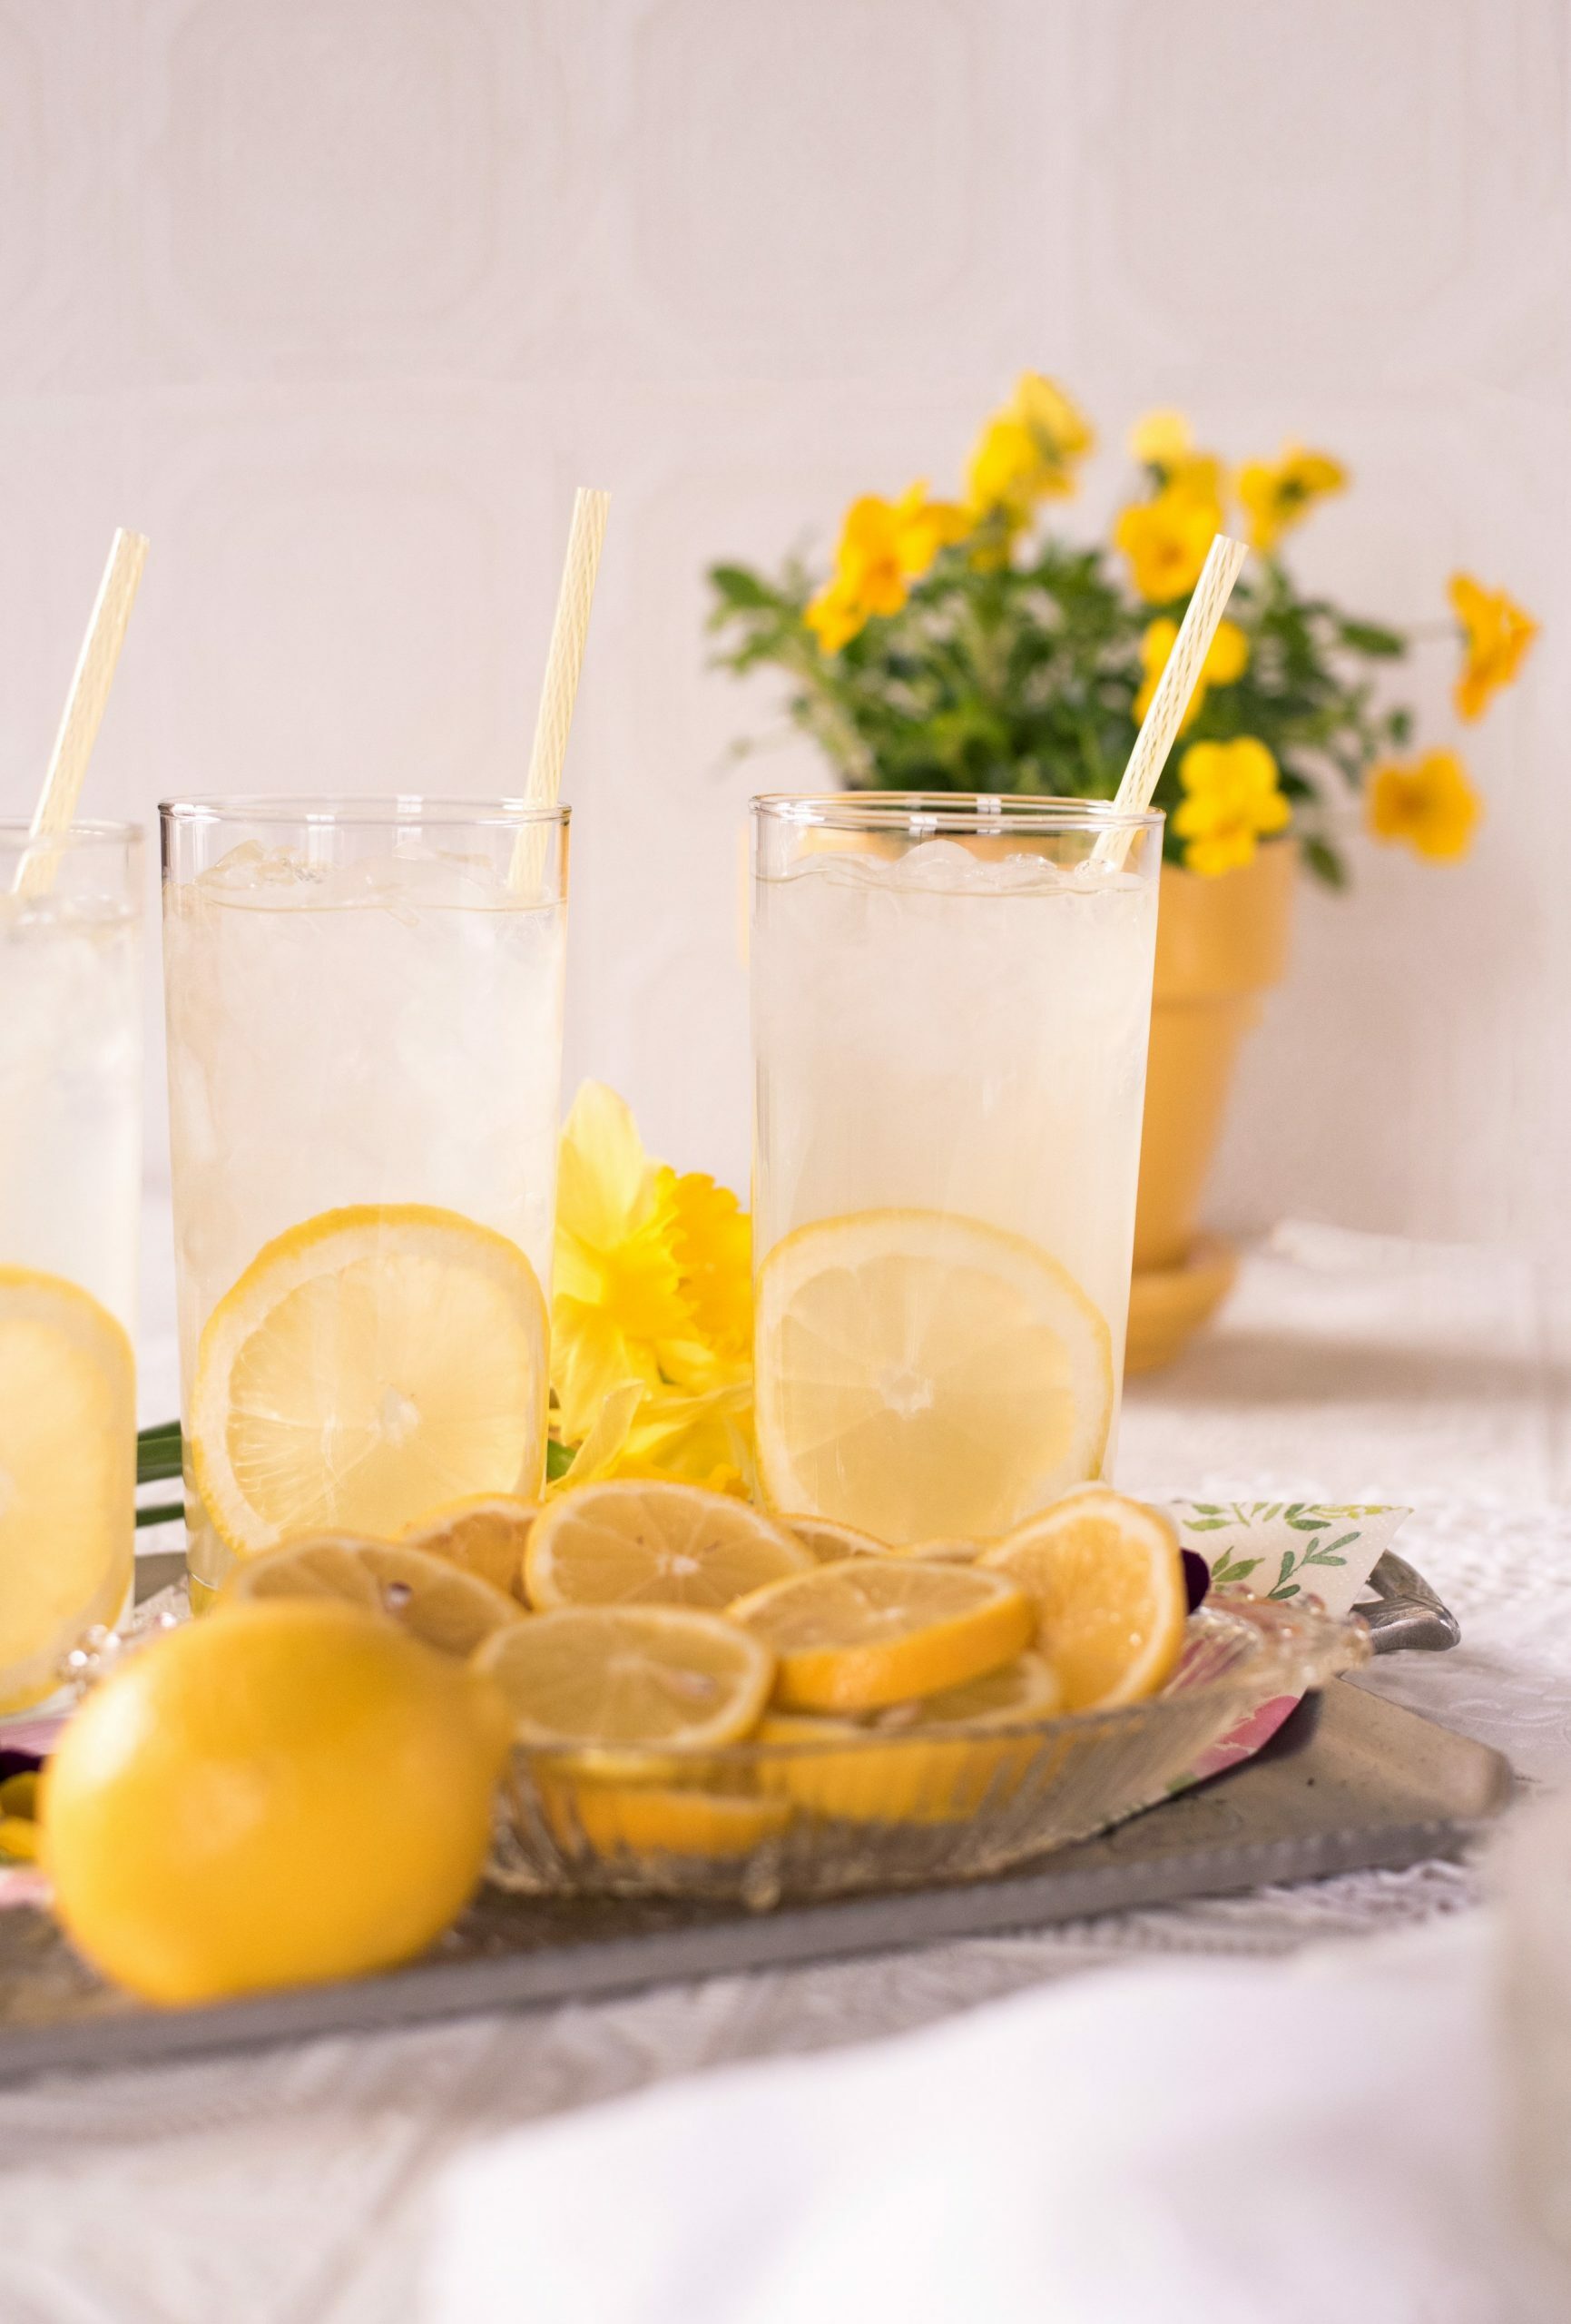 Refreshing Lemonade Recipes to Keep You Cool This Summer